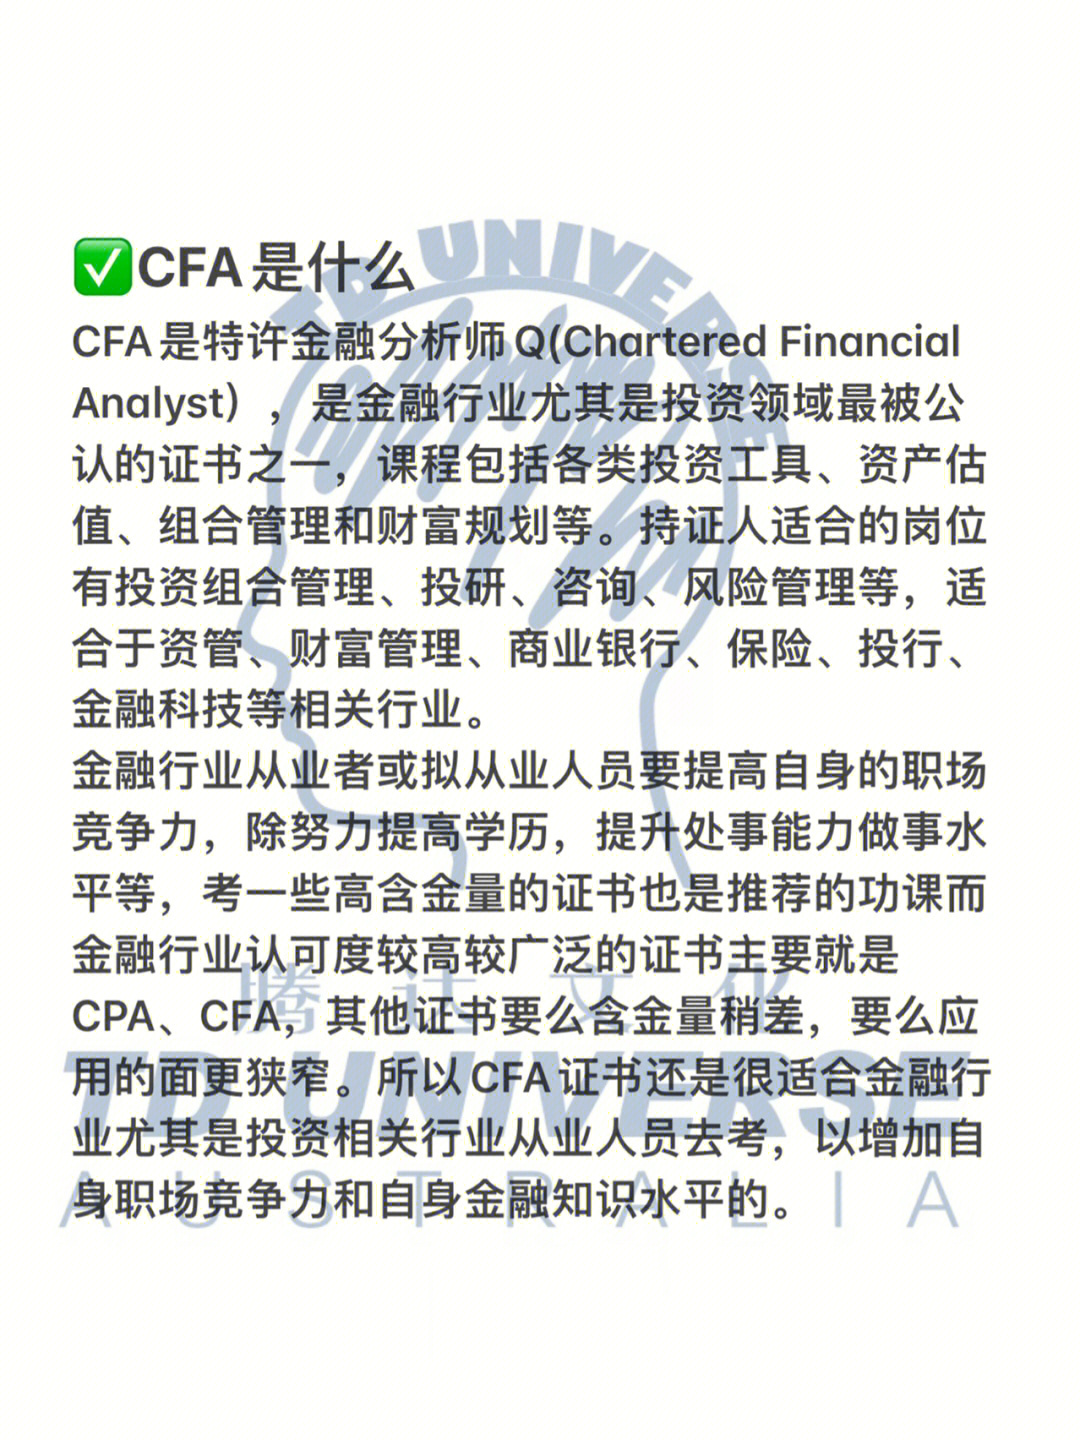 73cfa是什么cfa是特许金融分析师q(chartered financial analyst)